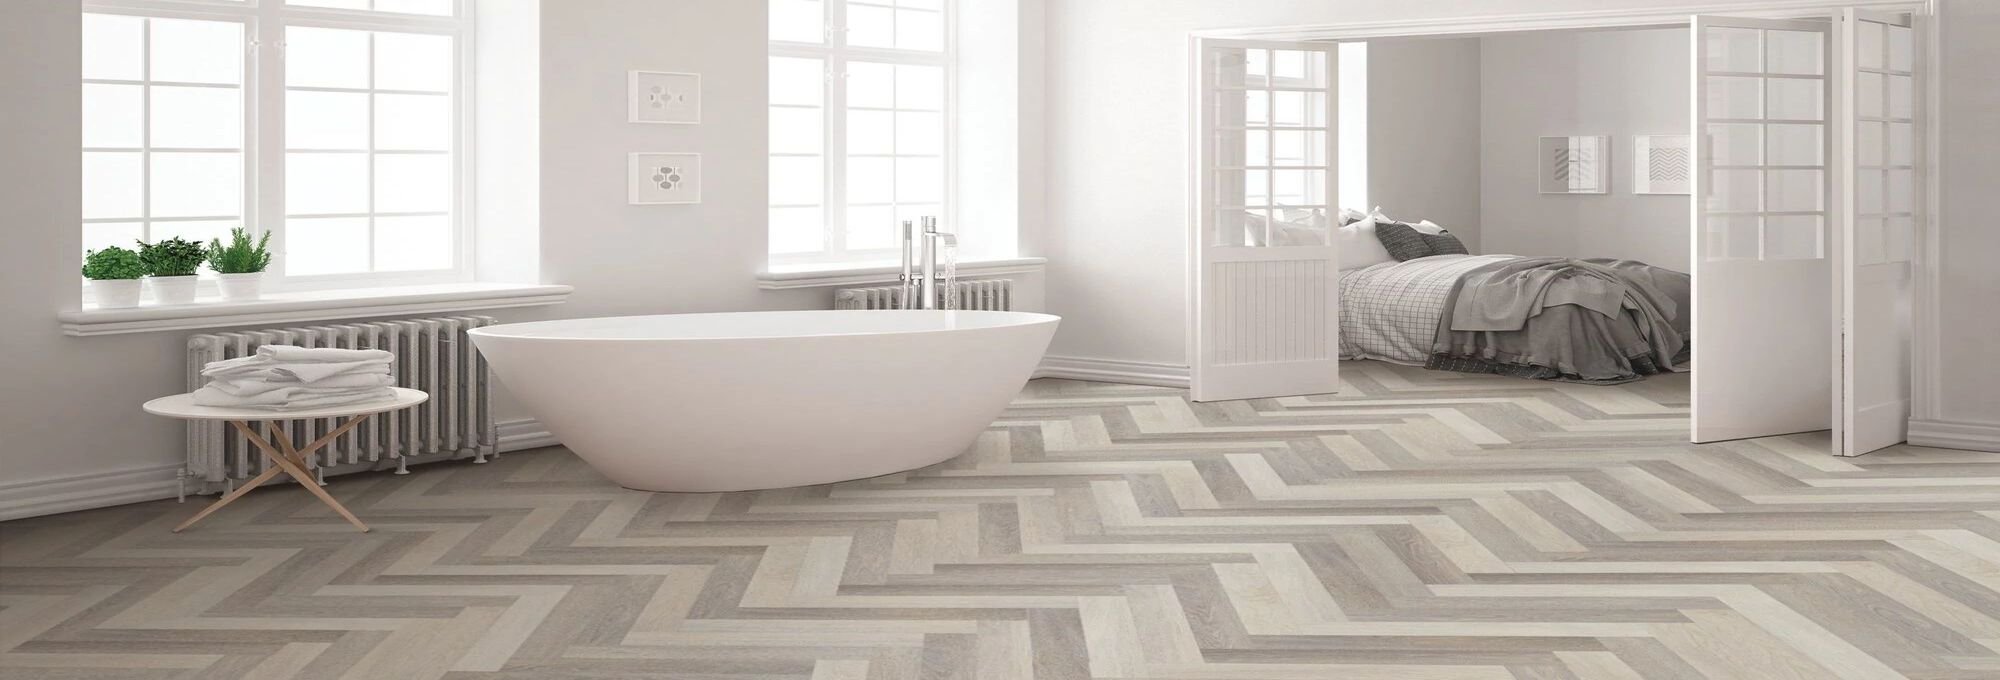 Bathroom with vinyl flooring from New Horizon Carpets in the Hemet, CA area